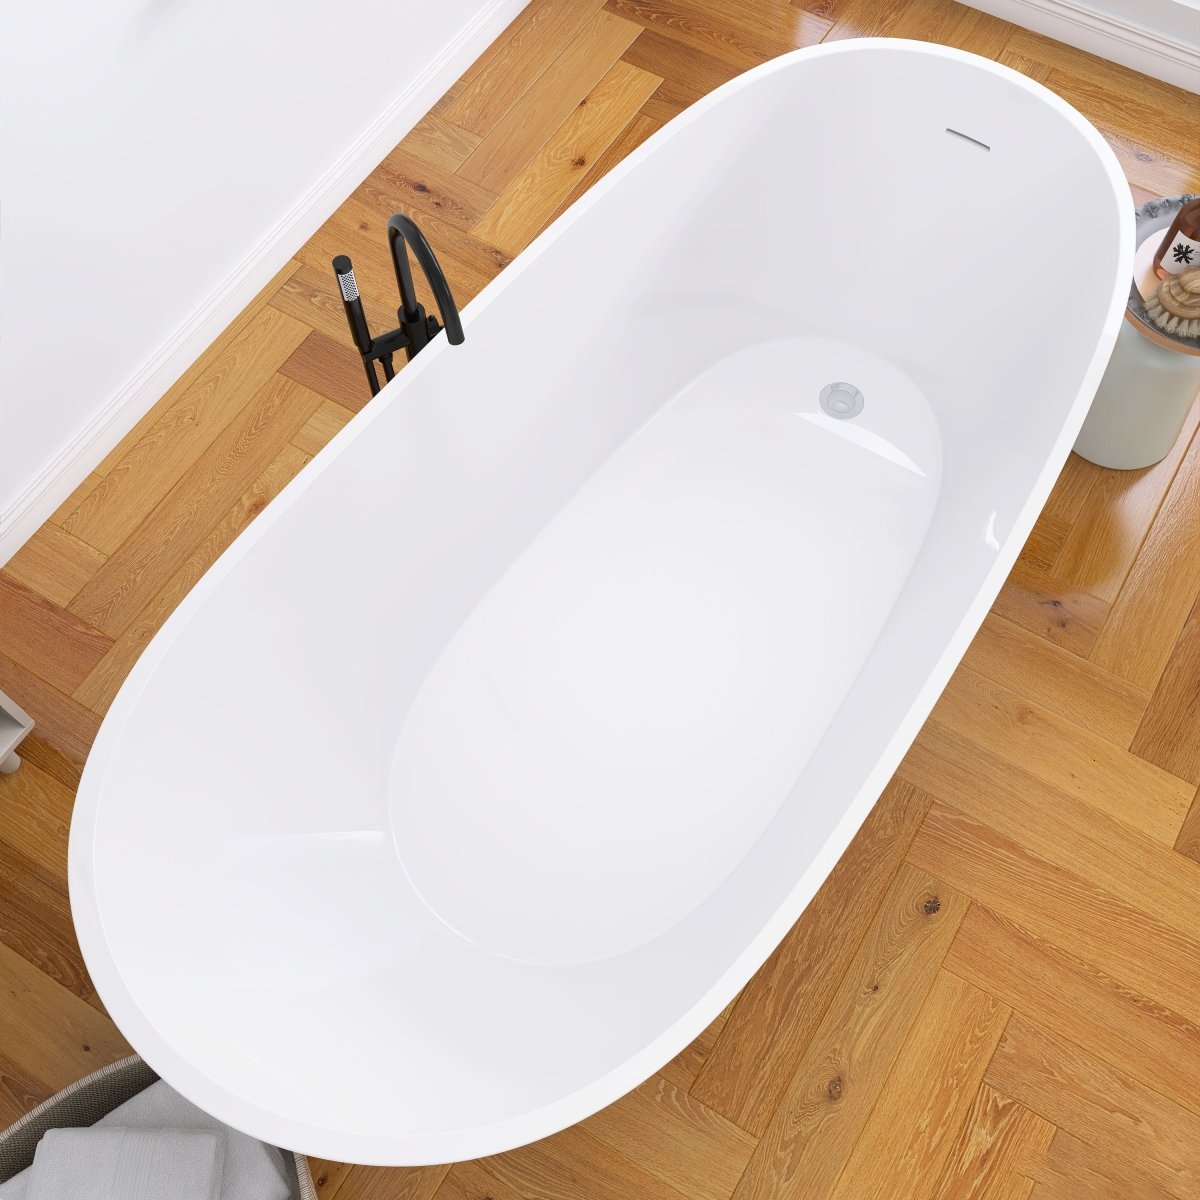 ExBrite Bathtub 67" Acrylic Free Standing Tub Classic Oval Shape Soaking Tub, Adjustable Freestanding Gloss White